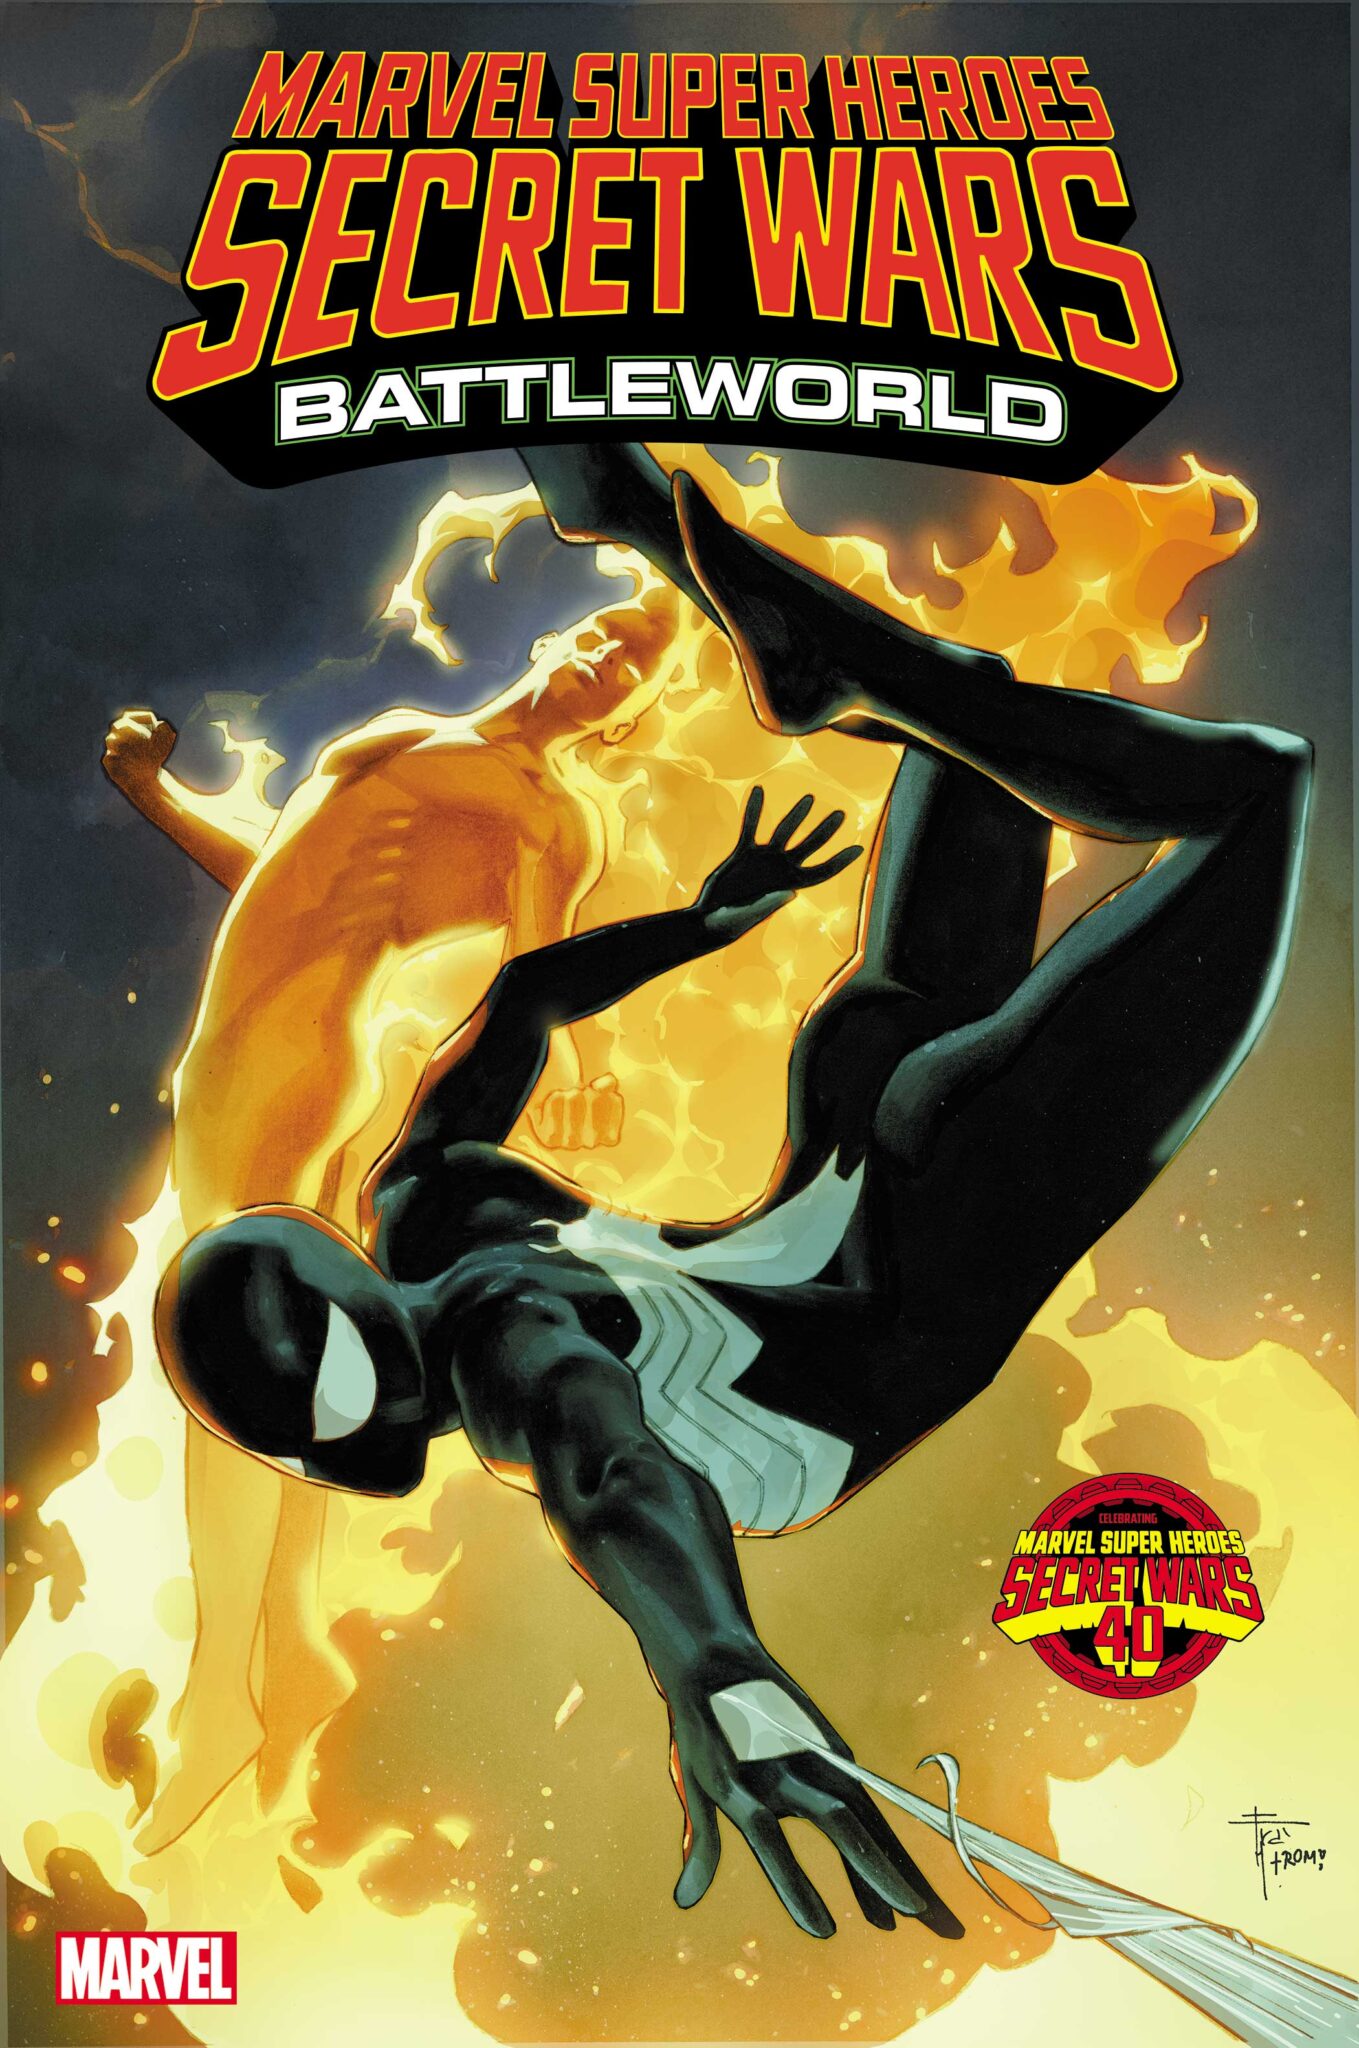 Secret Wars Battleworld Variant Cover by FRANCESCO MOBILI